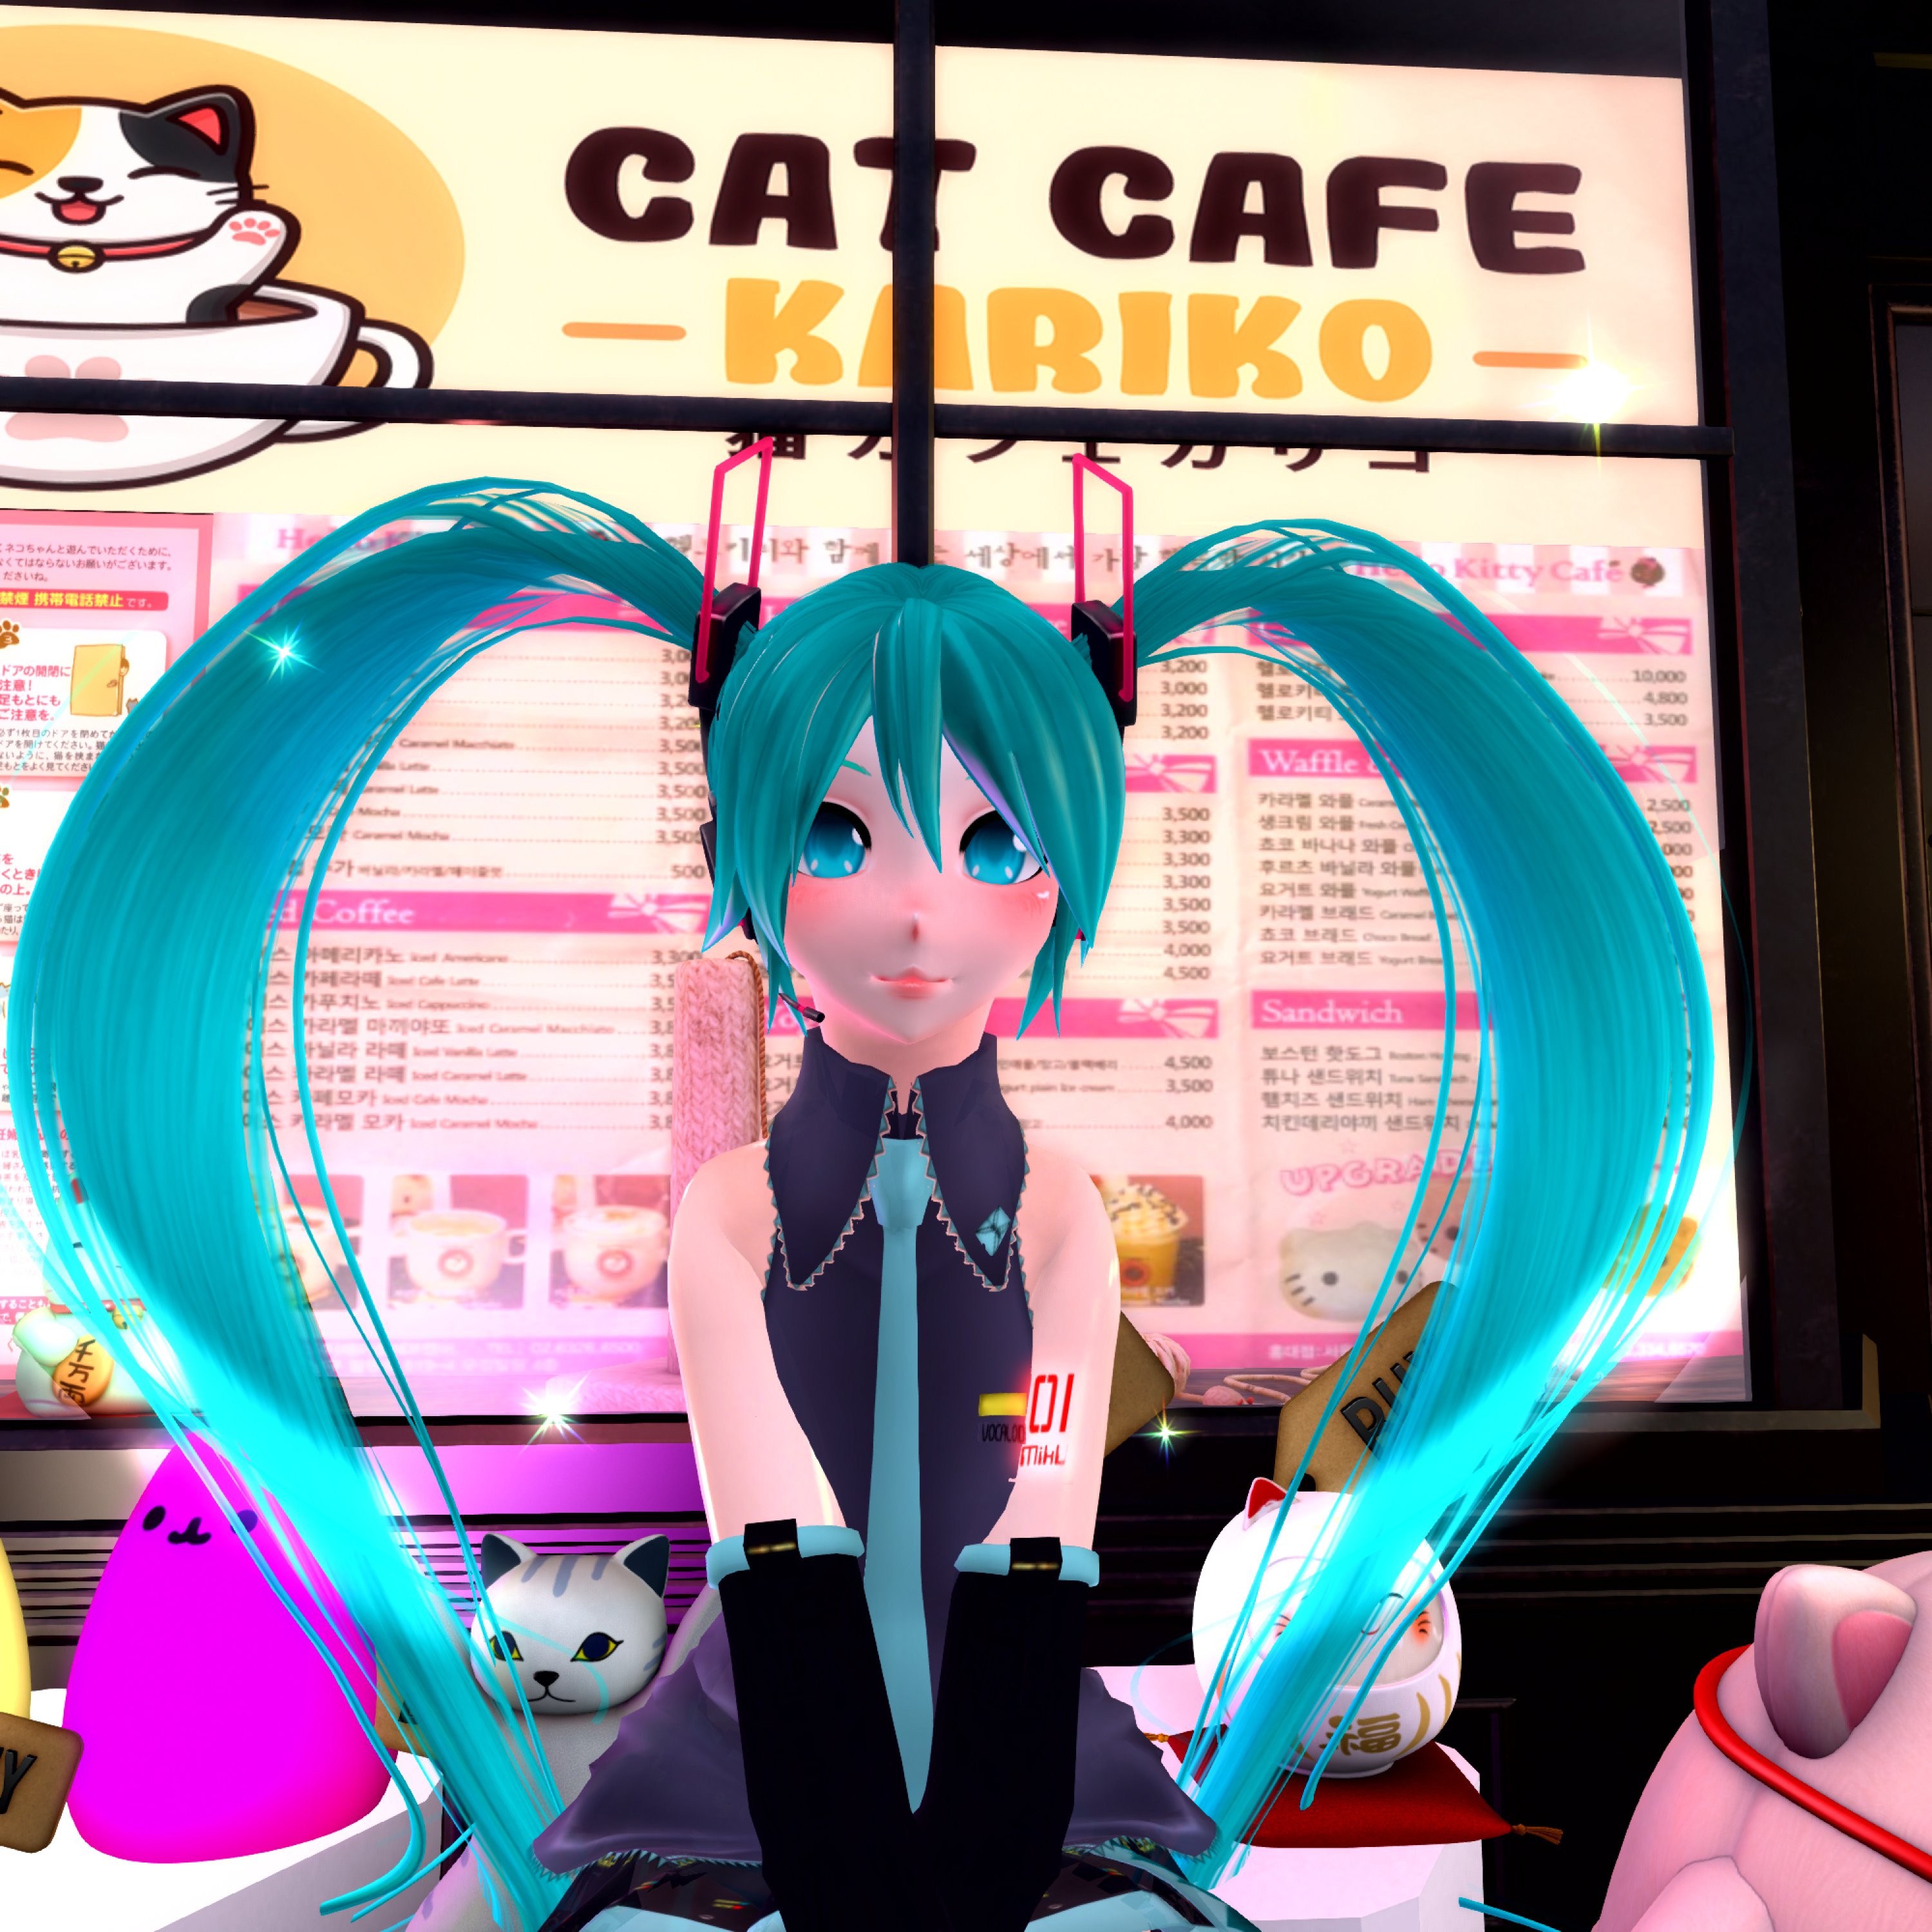 Cat Cafe Kariko